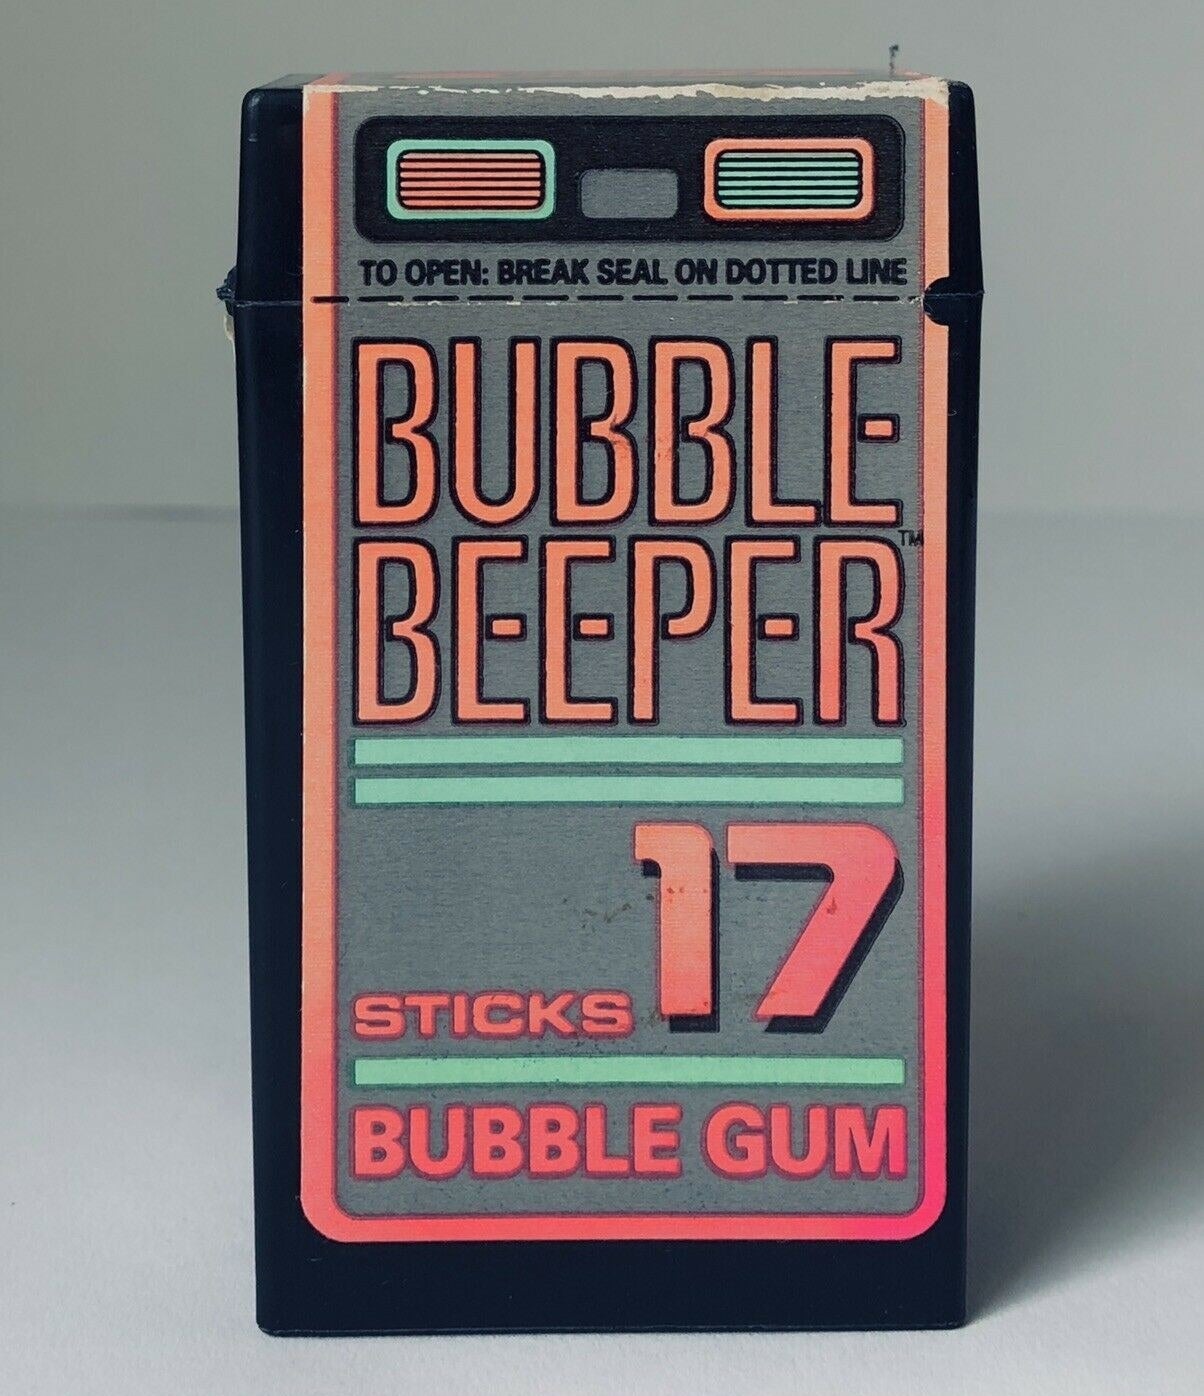 A Bubble Beeper Bubble Case.